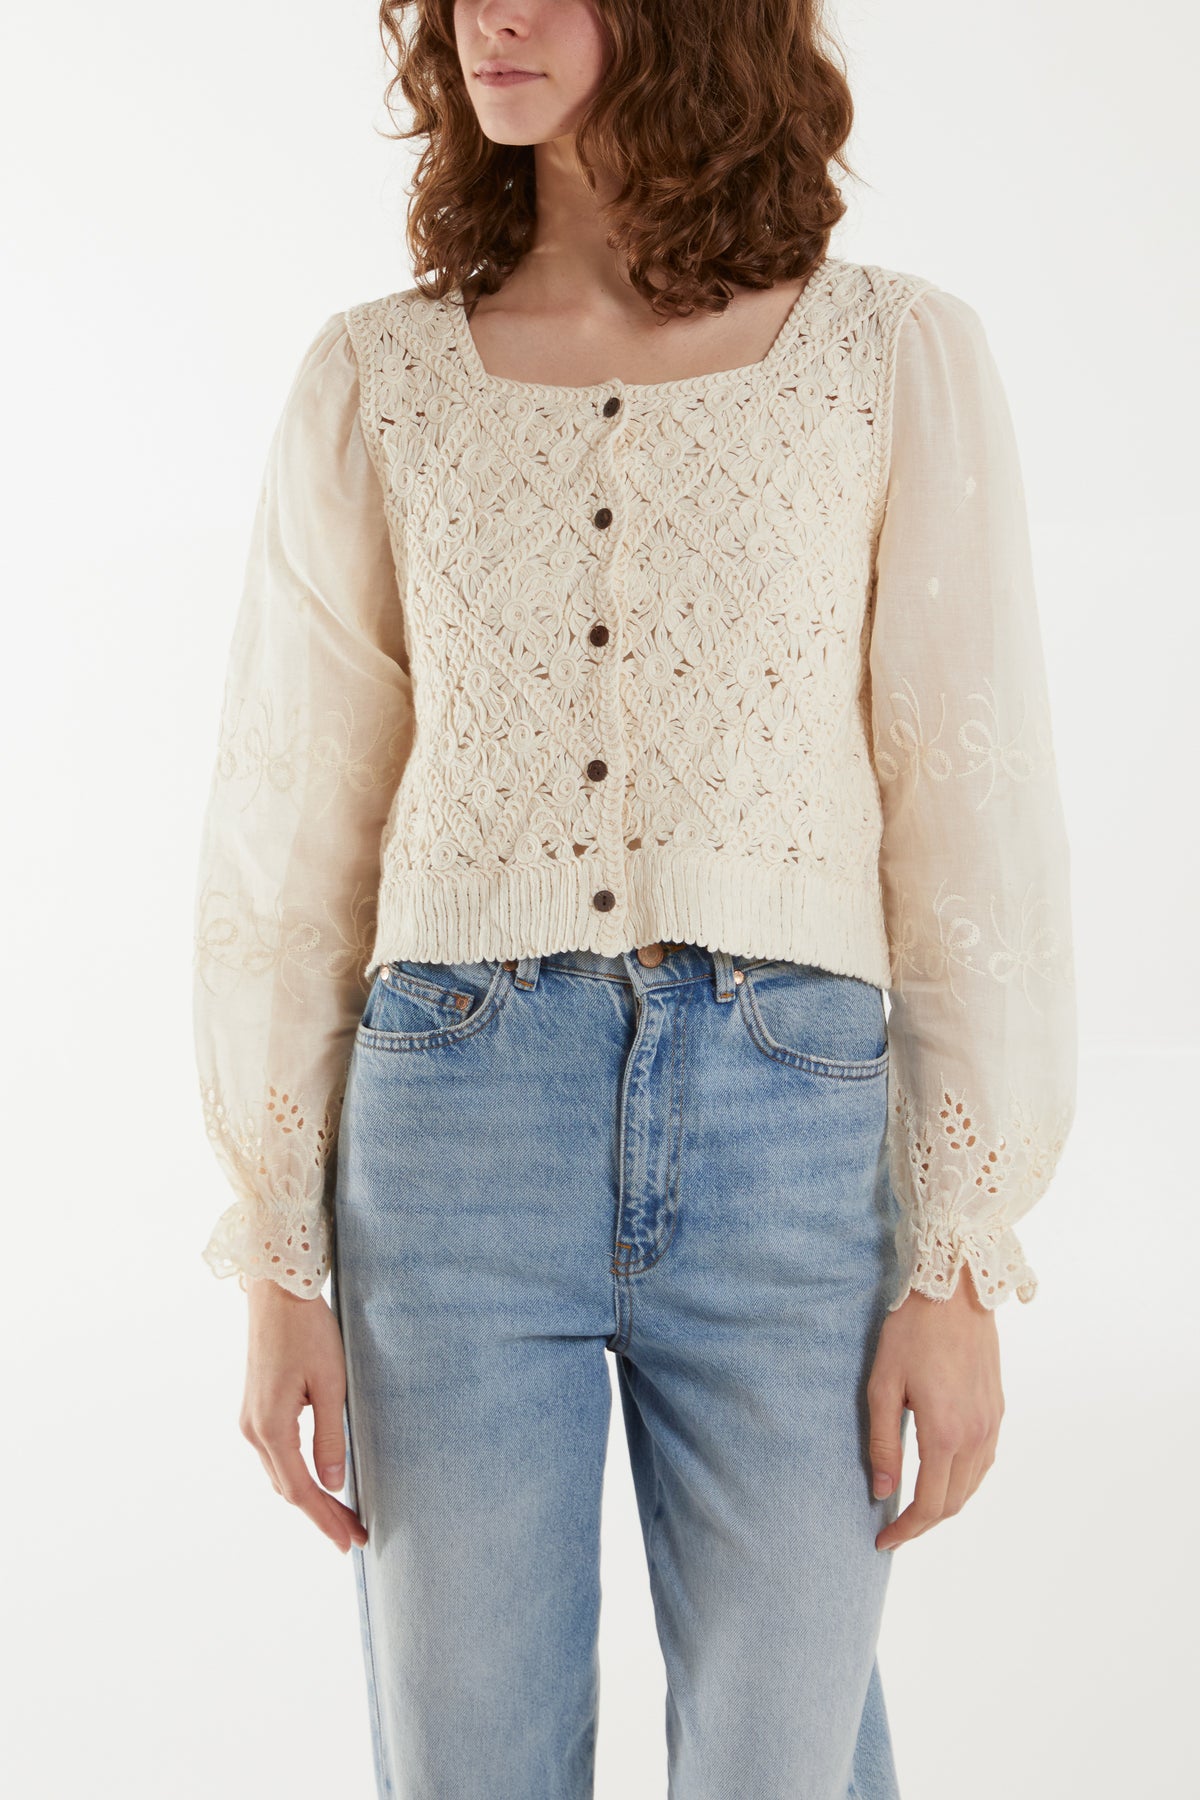 Crochet & Broderie Anglaise Detail Shirt